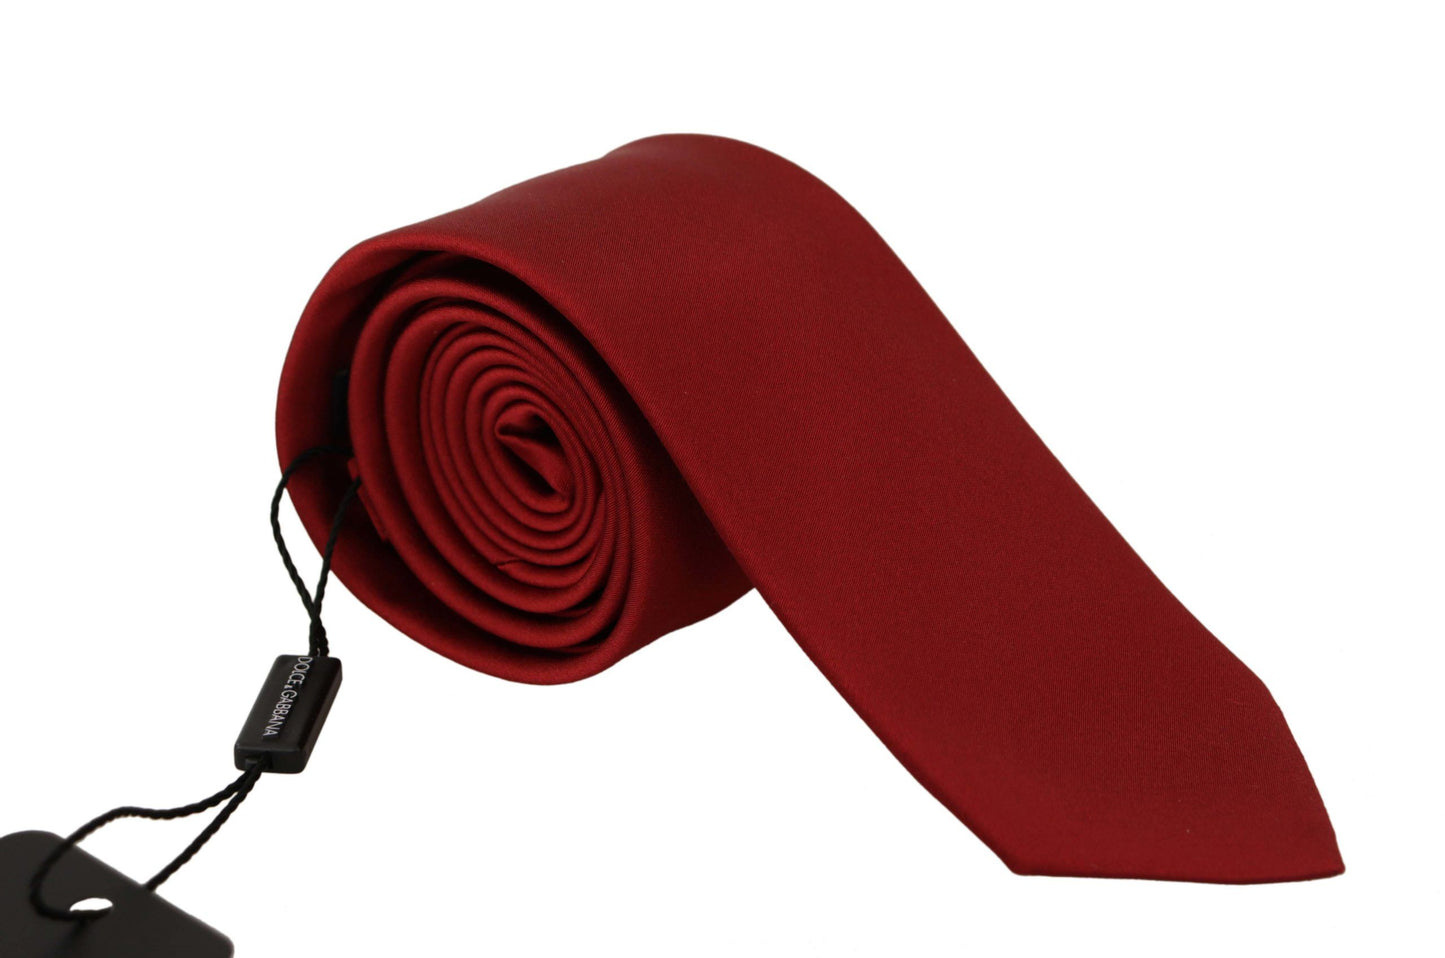 Exclusive Silk Red Tie